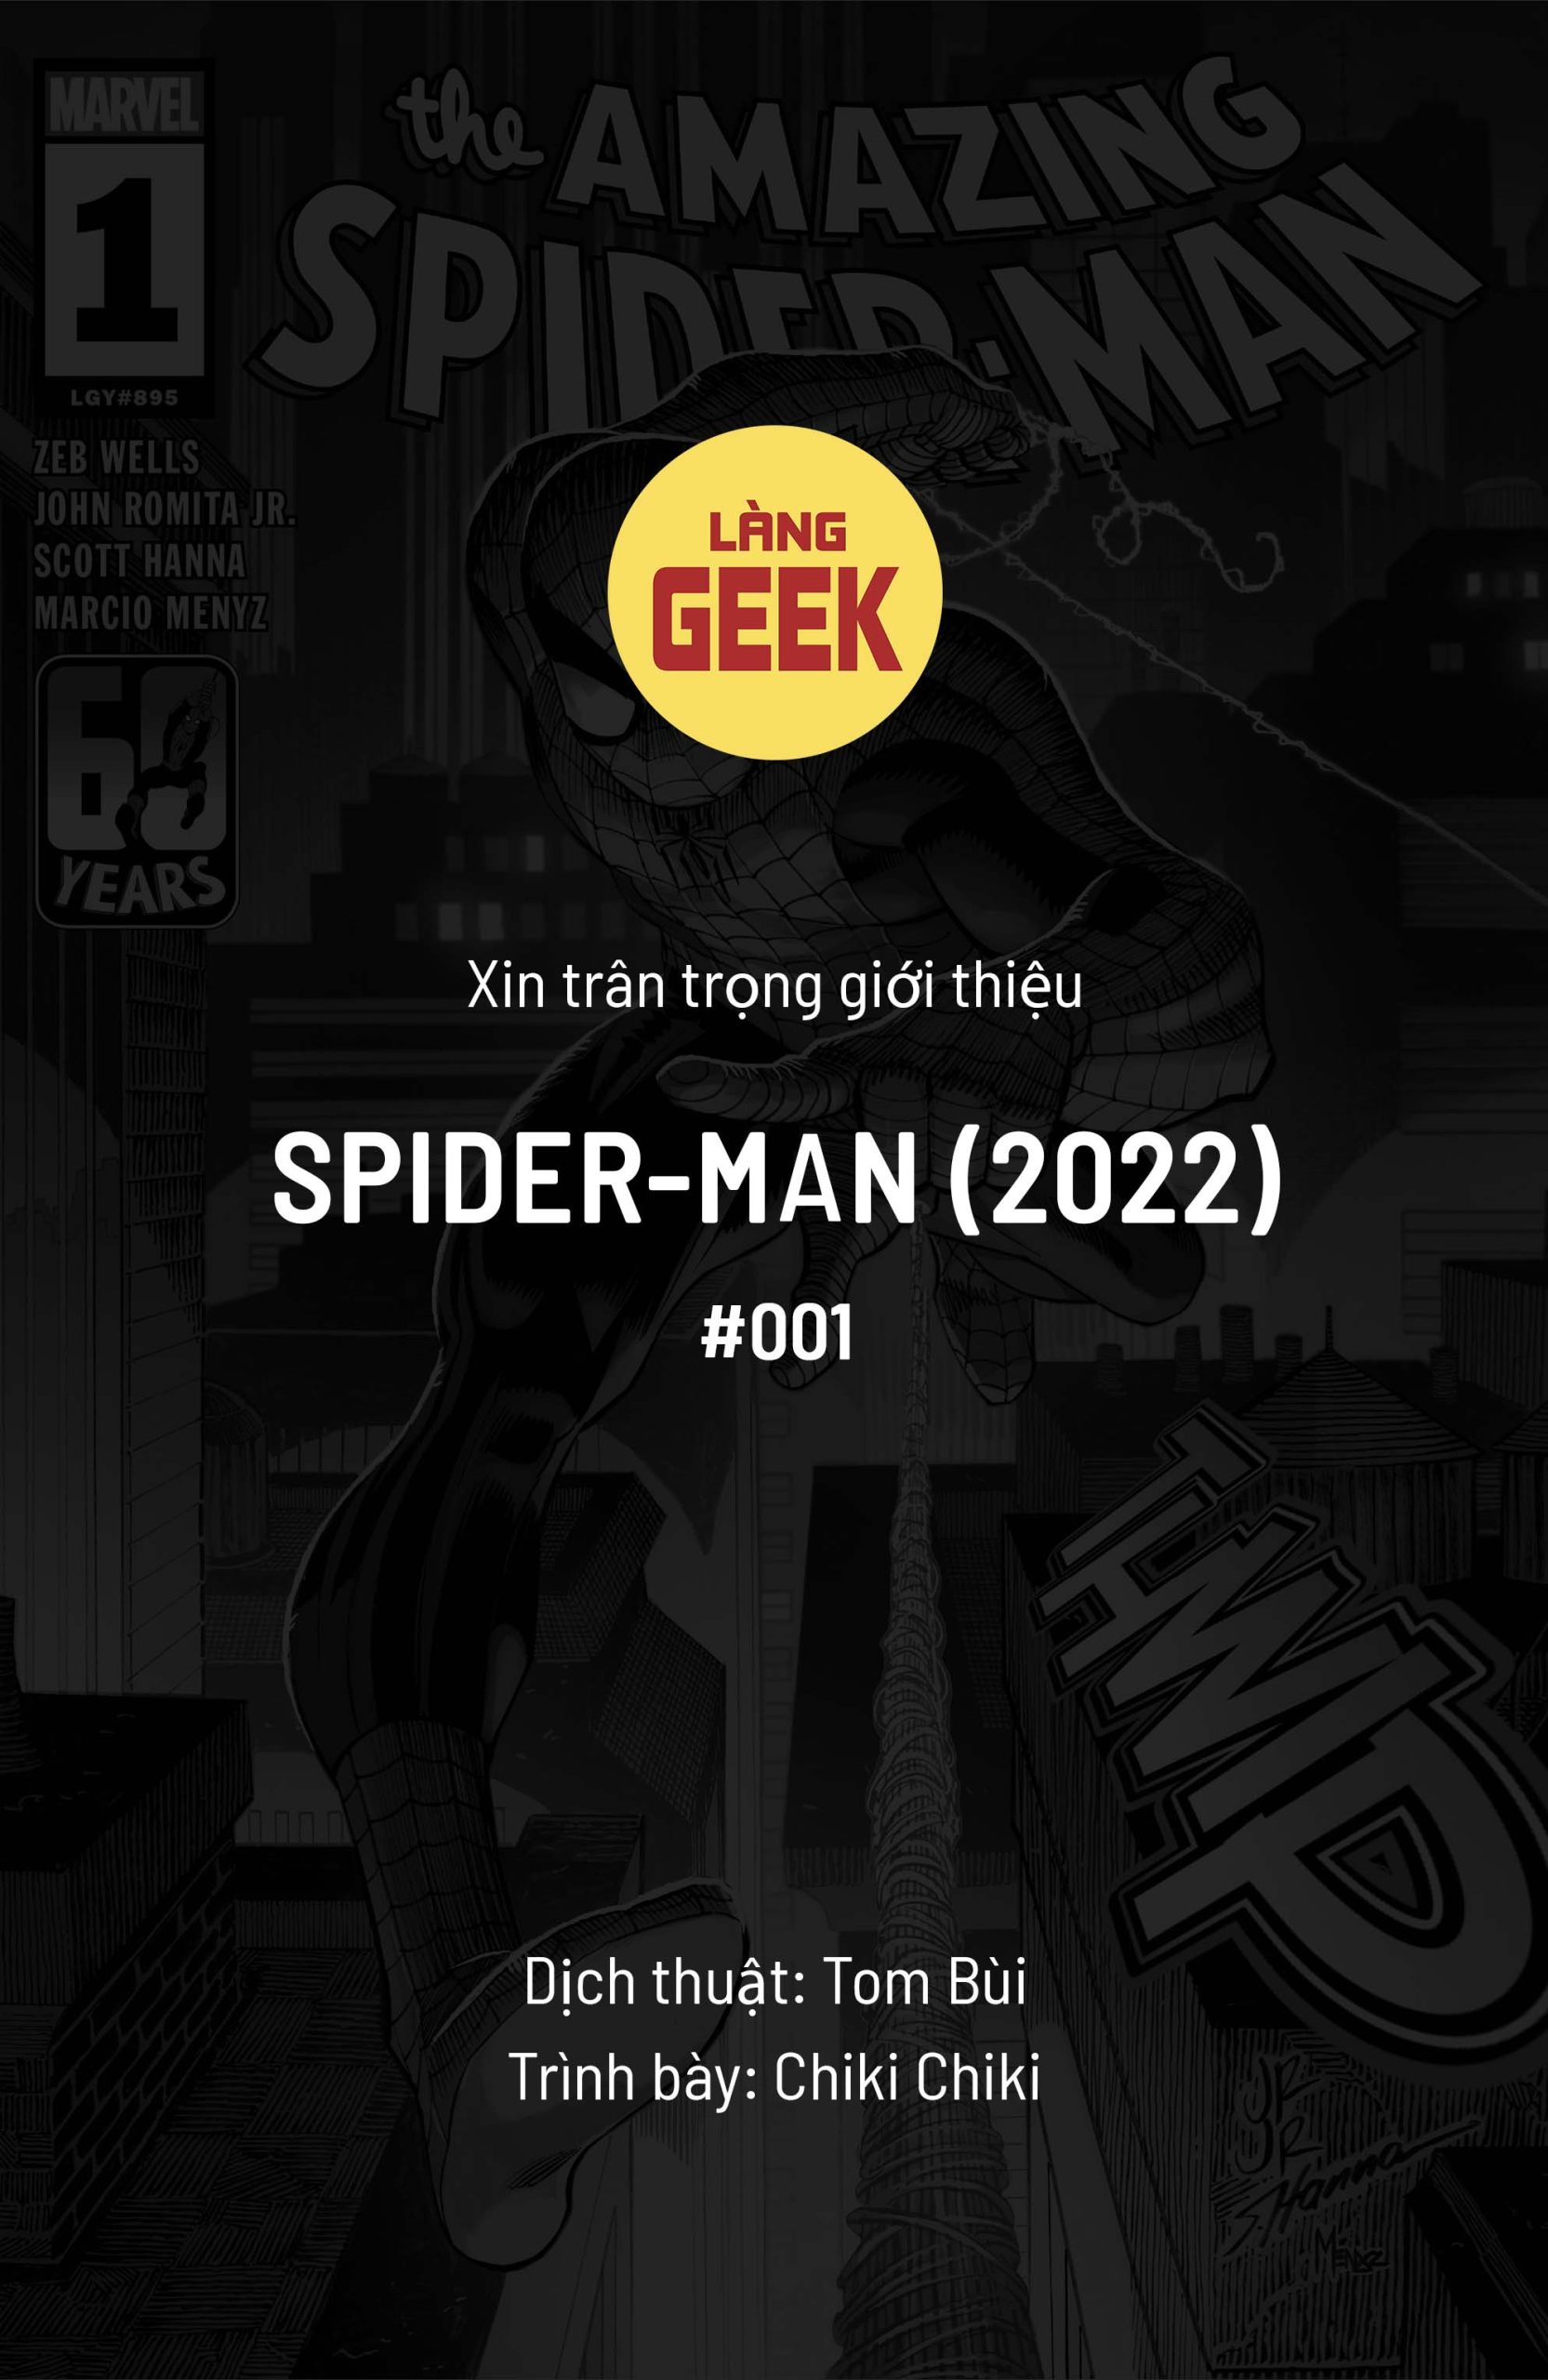 https://langgeek.net/wp-content/webpc-passthru.php?src=https://langgeek.net/wp-content/uploads/2023/03/Amazing-Spider-Man-2022-001-000-1-2-scaled.jpg&nocache=1